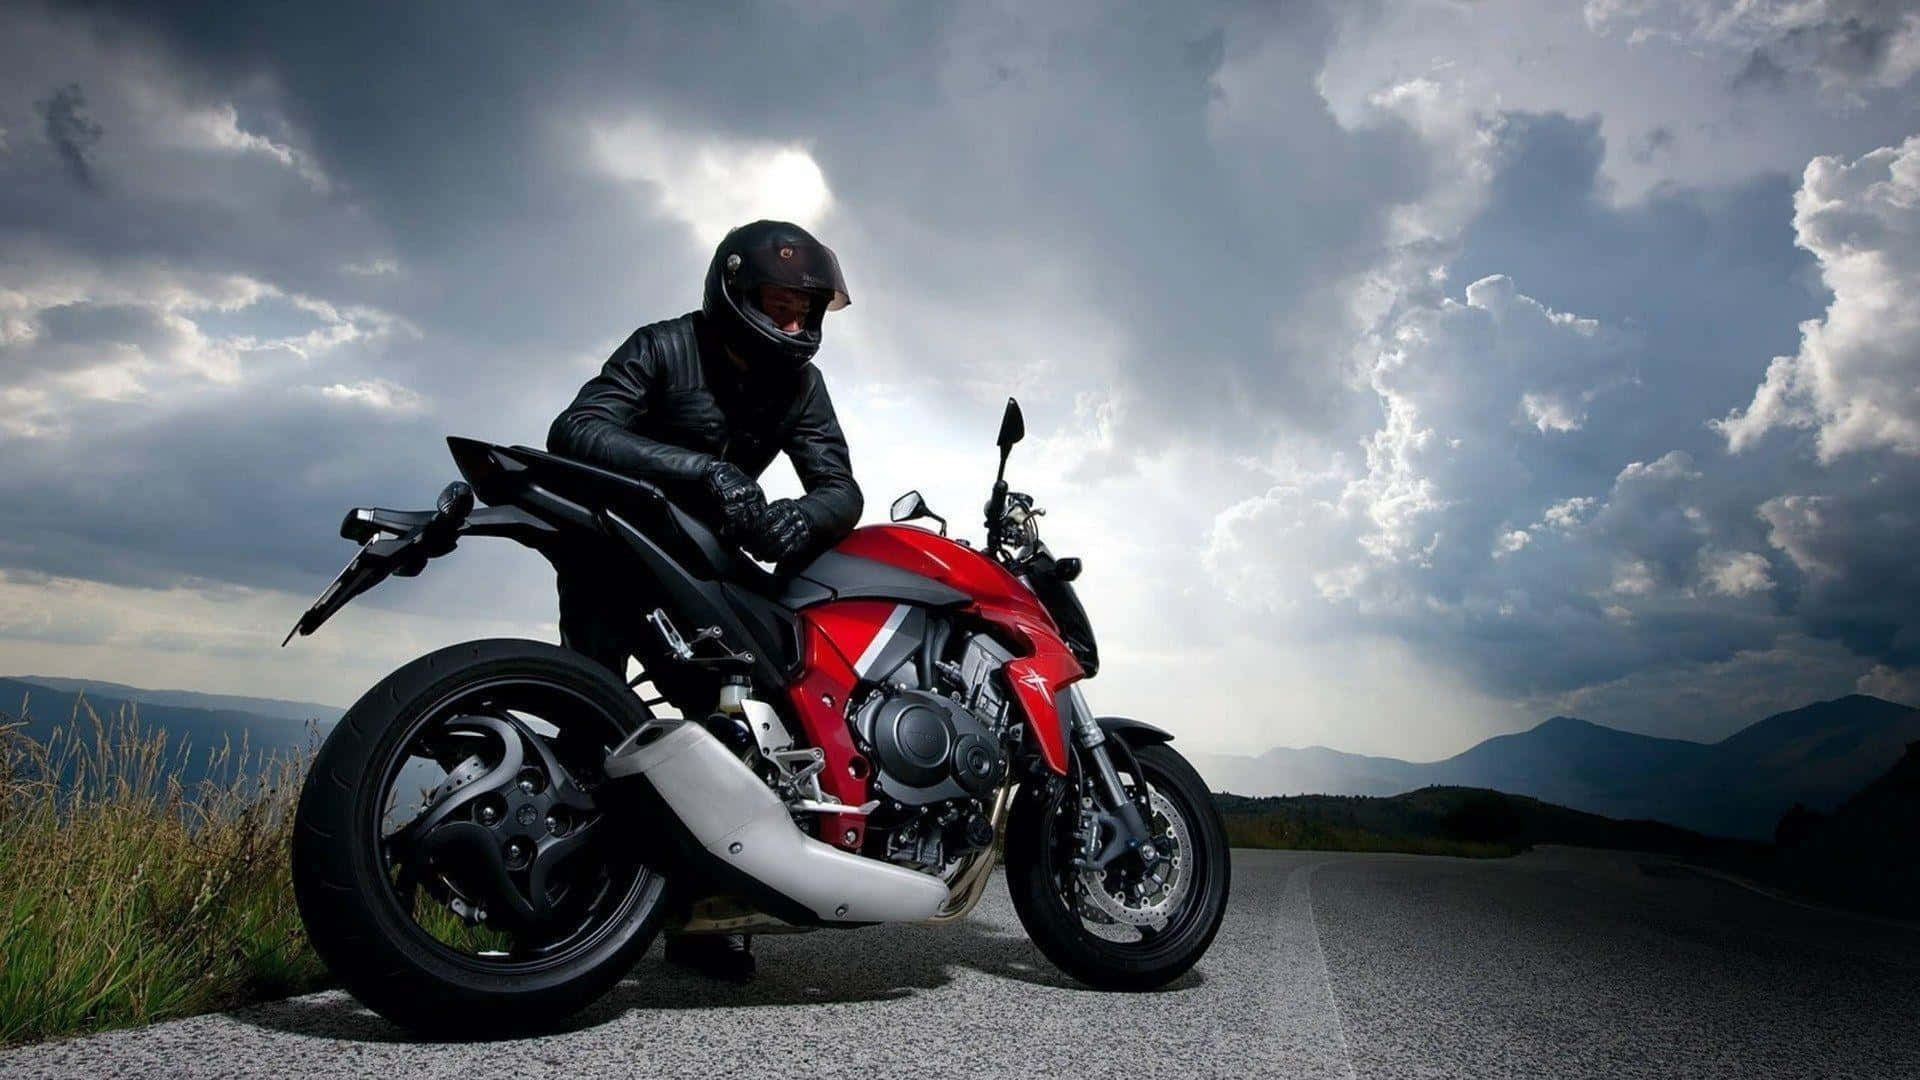 Honda Motorcycle Wallpapers  Top Free Honda Motorcycle Backgrounds   WallpaperAccess